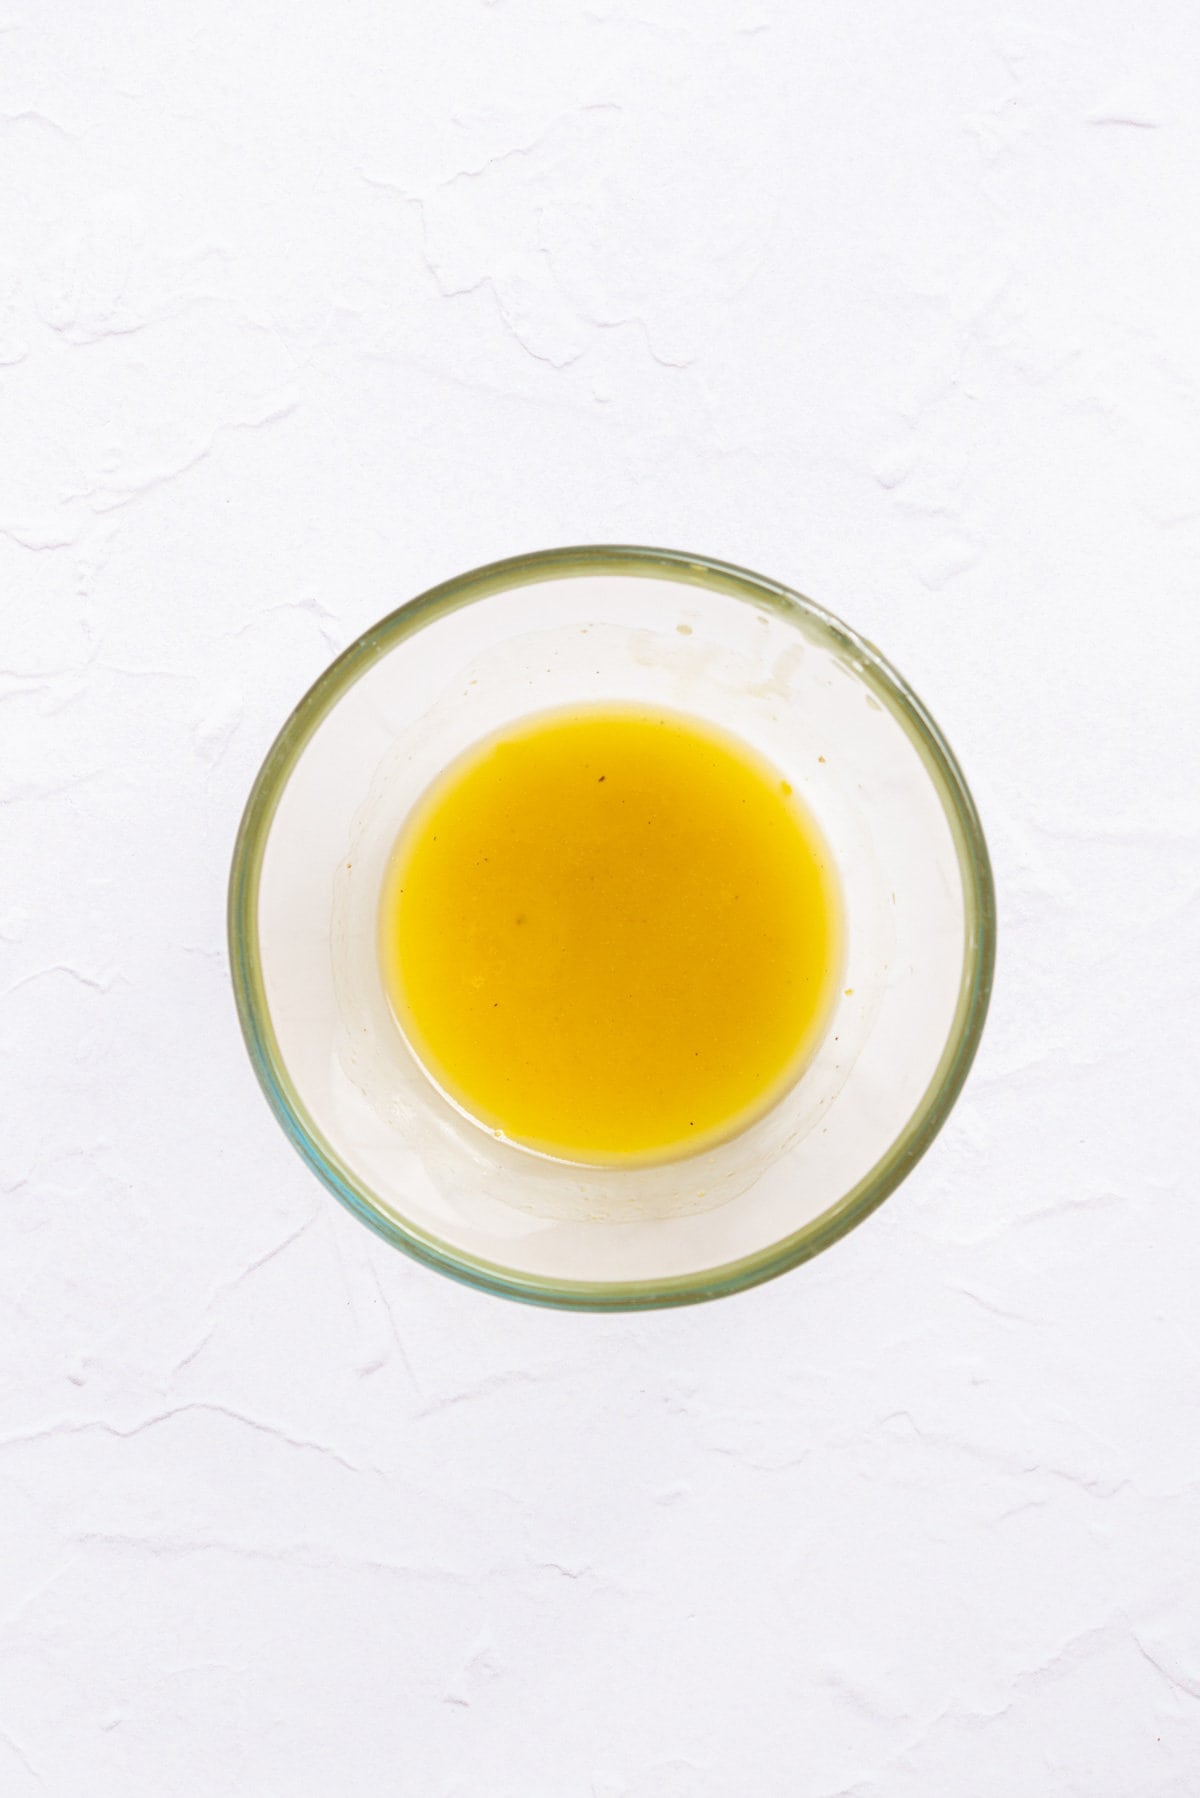 An image of a mixture of lemon juice, lemon zest, golden syrup, and olive oil